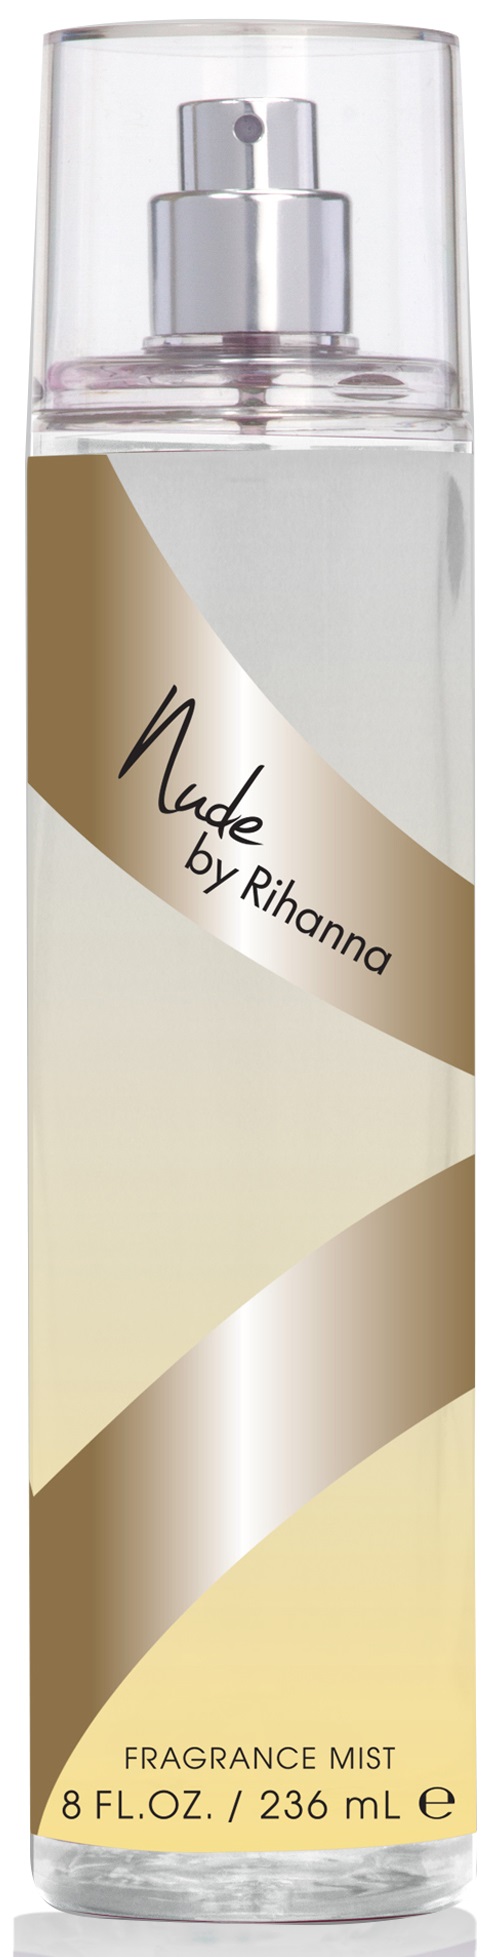 Rihanna Nude Body Mist